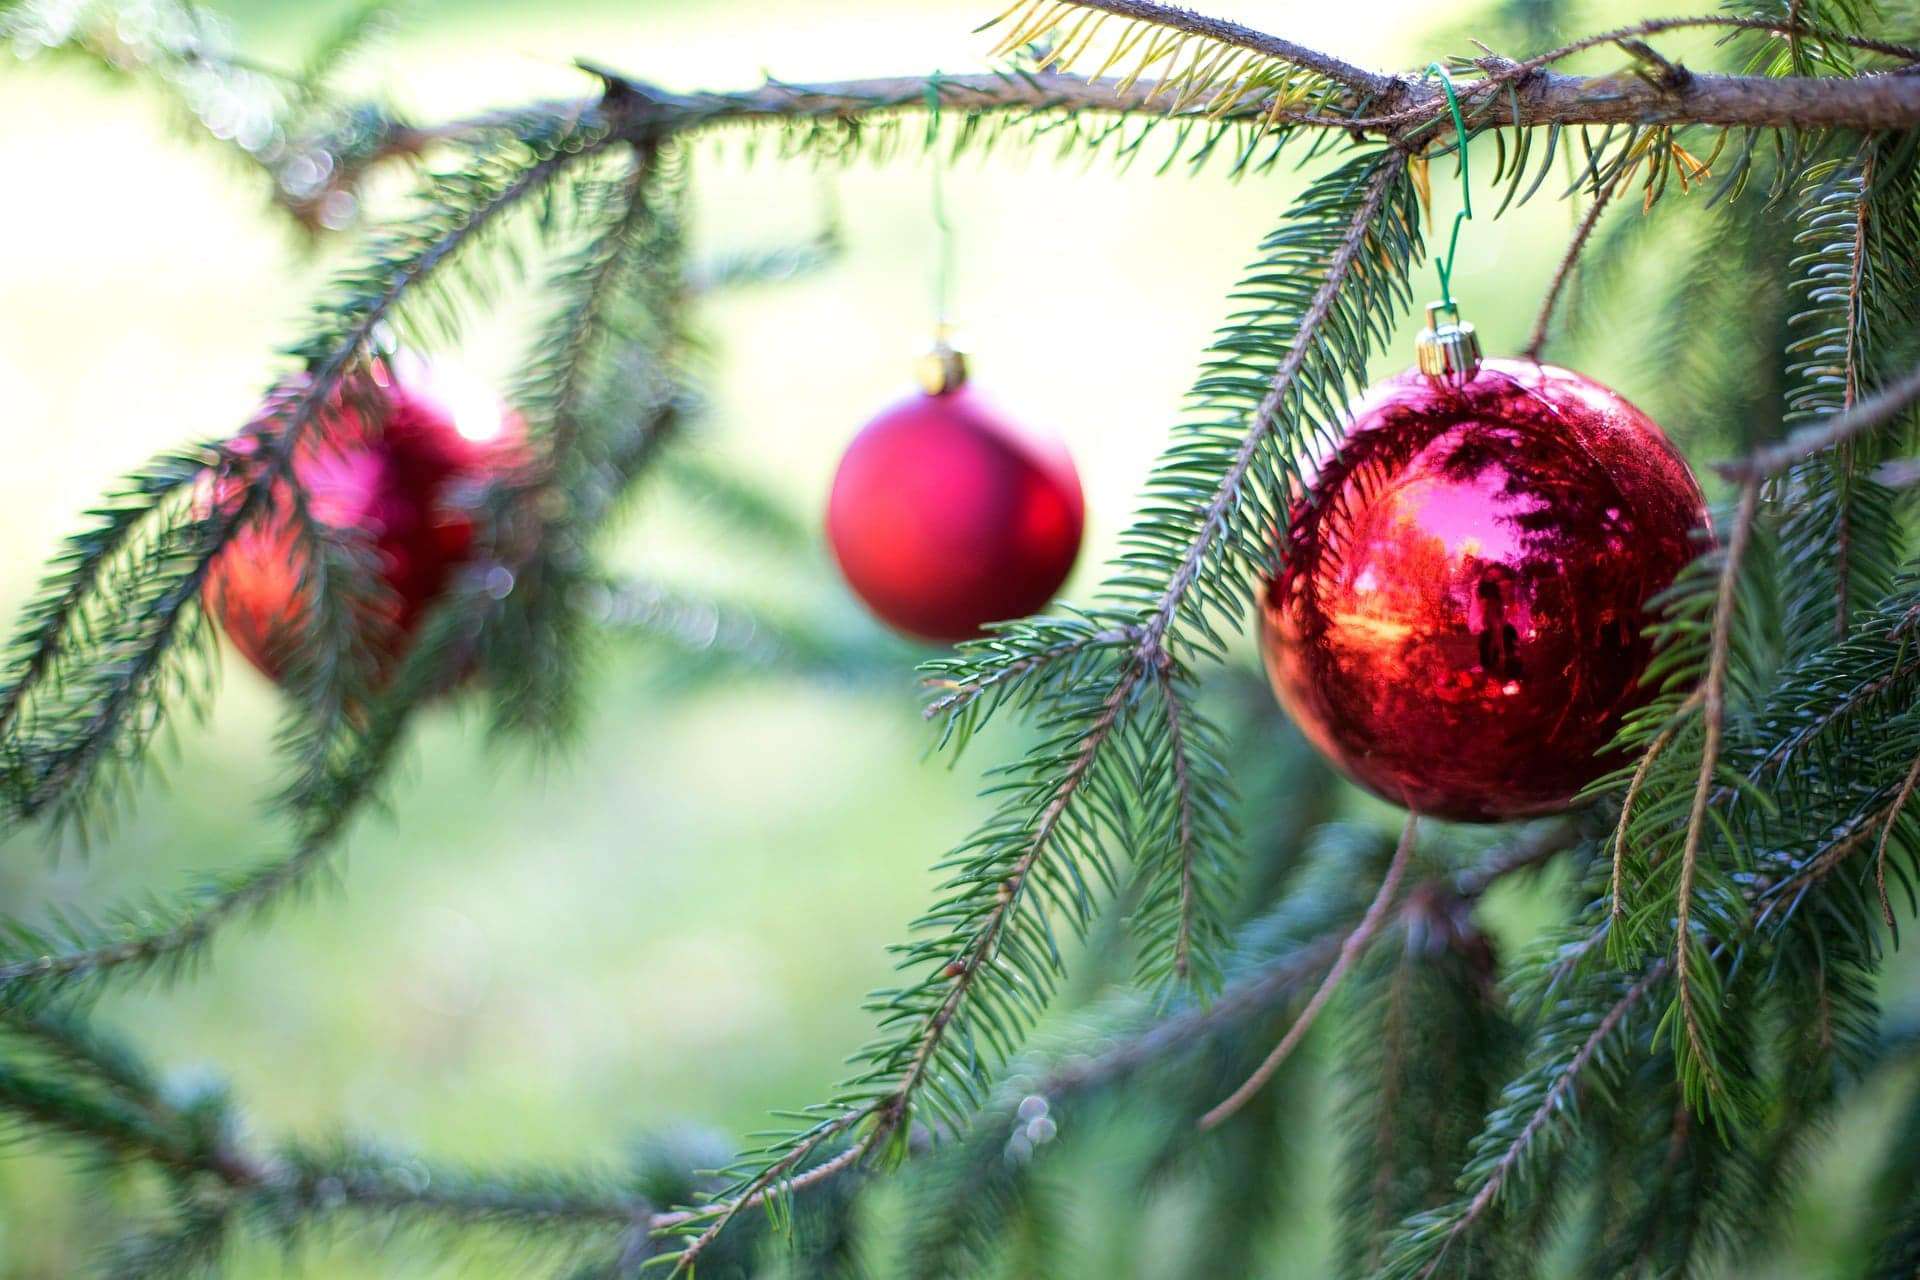 ornaments to celebrate Christmas in Gatlinburg